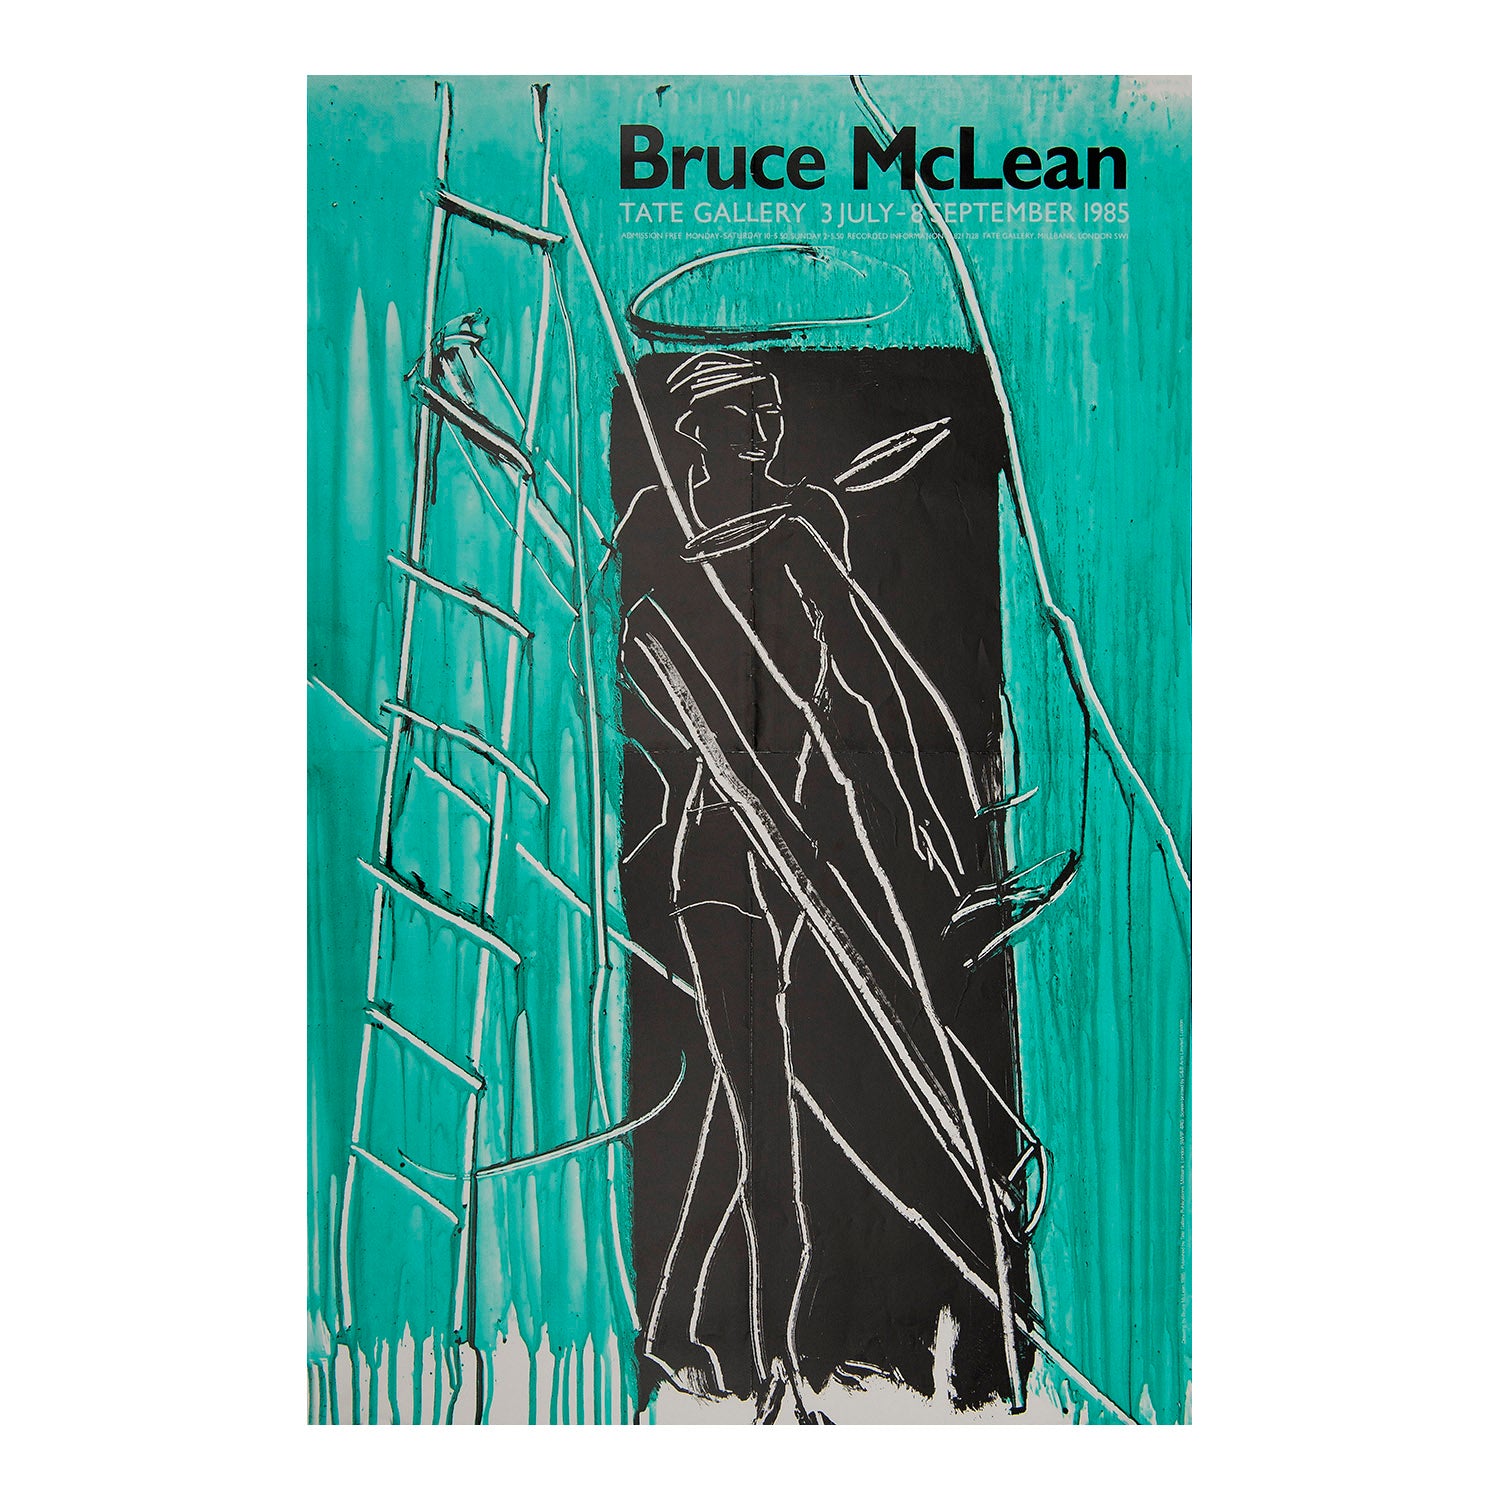 Bruce McLean